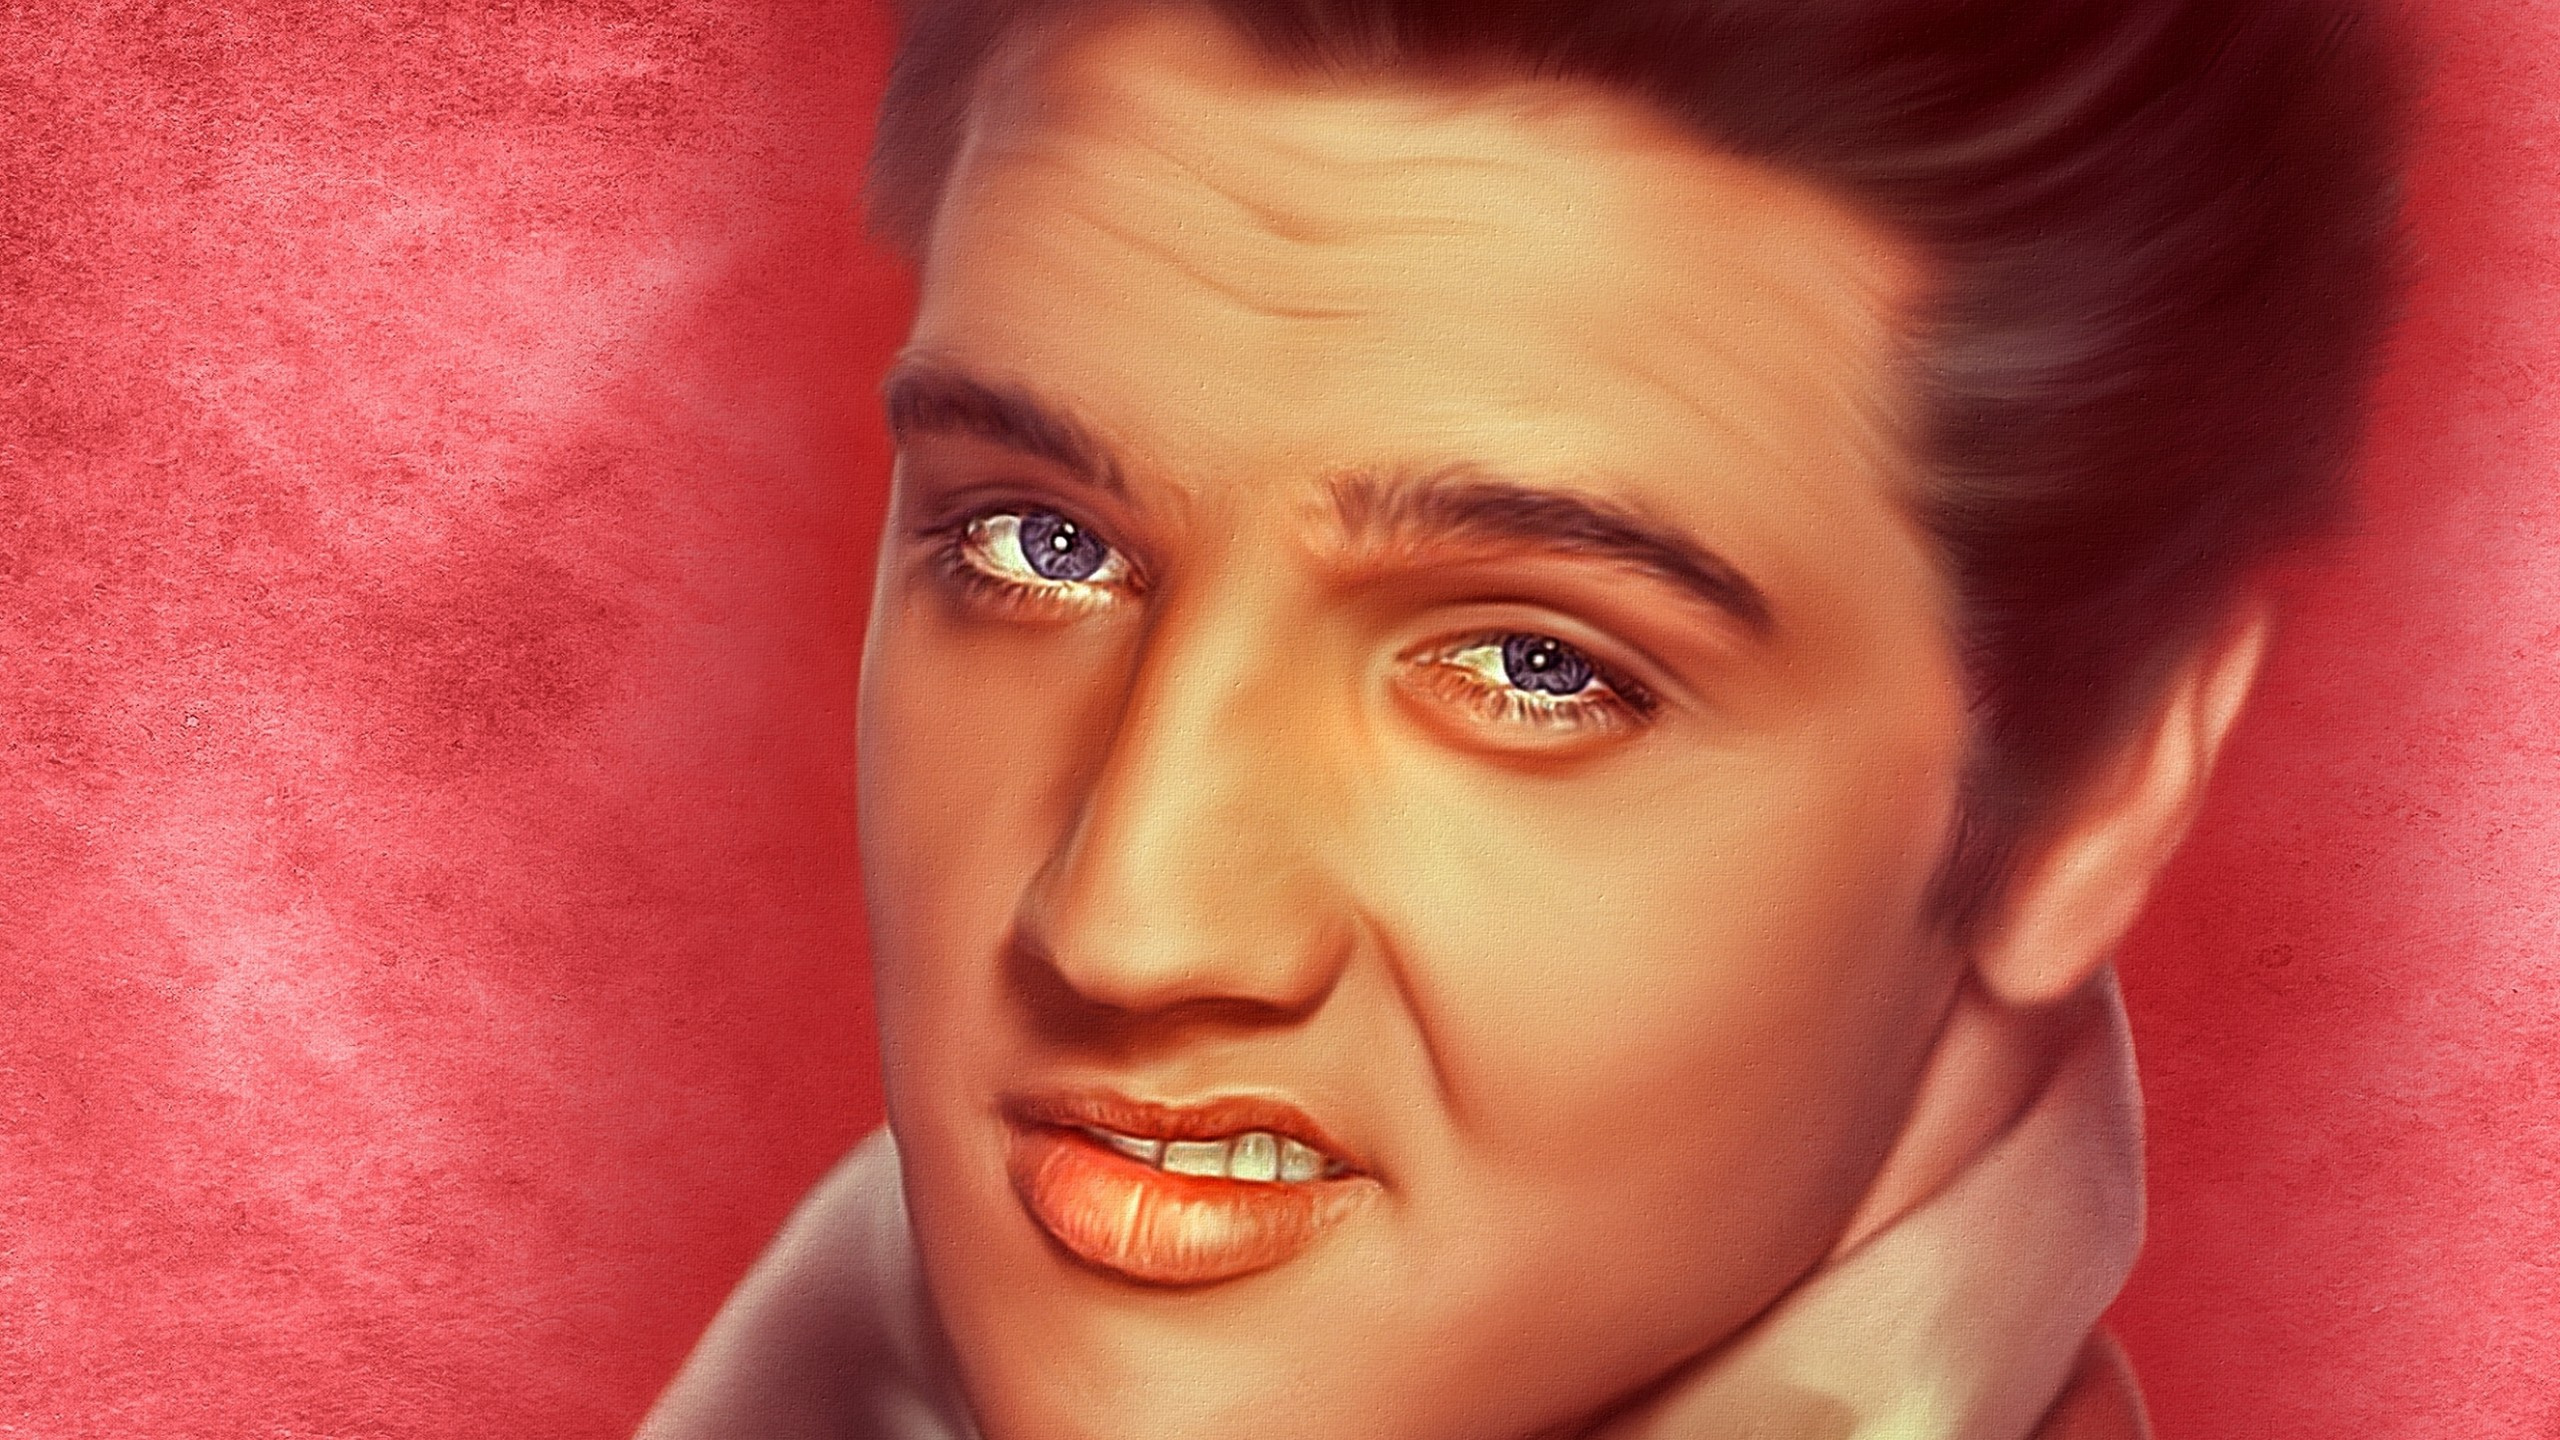 Elvis Presley, Art, Musician, Rock and Roll, Face. Wallpaper in 2560x1440 Resolution